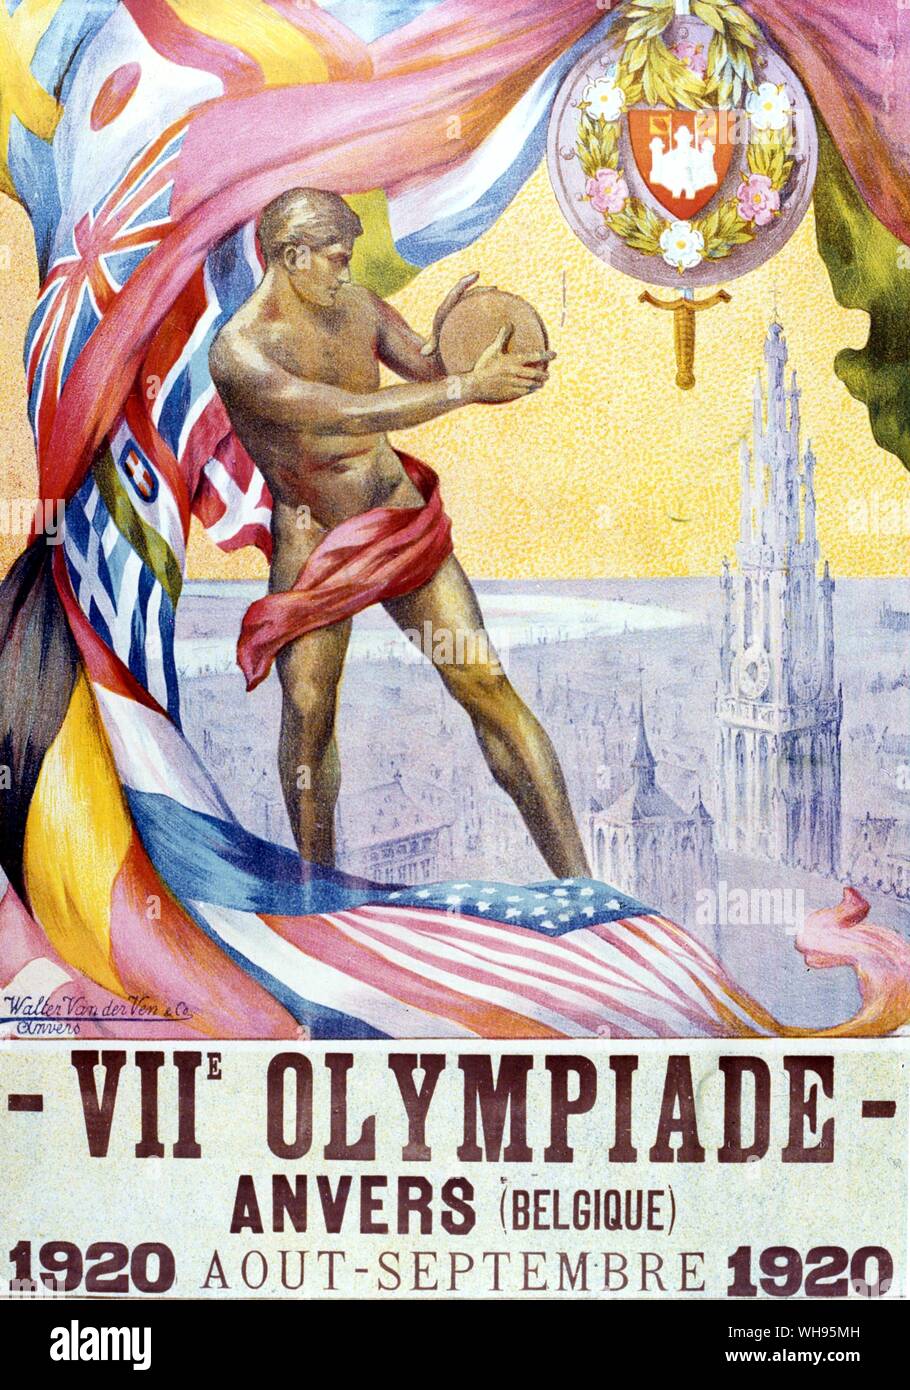 Art subjects: Ephemera/ Anvers Olympic poster, 1920 Stock Photo